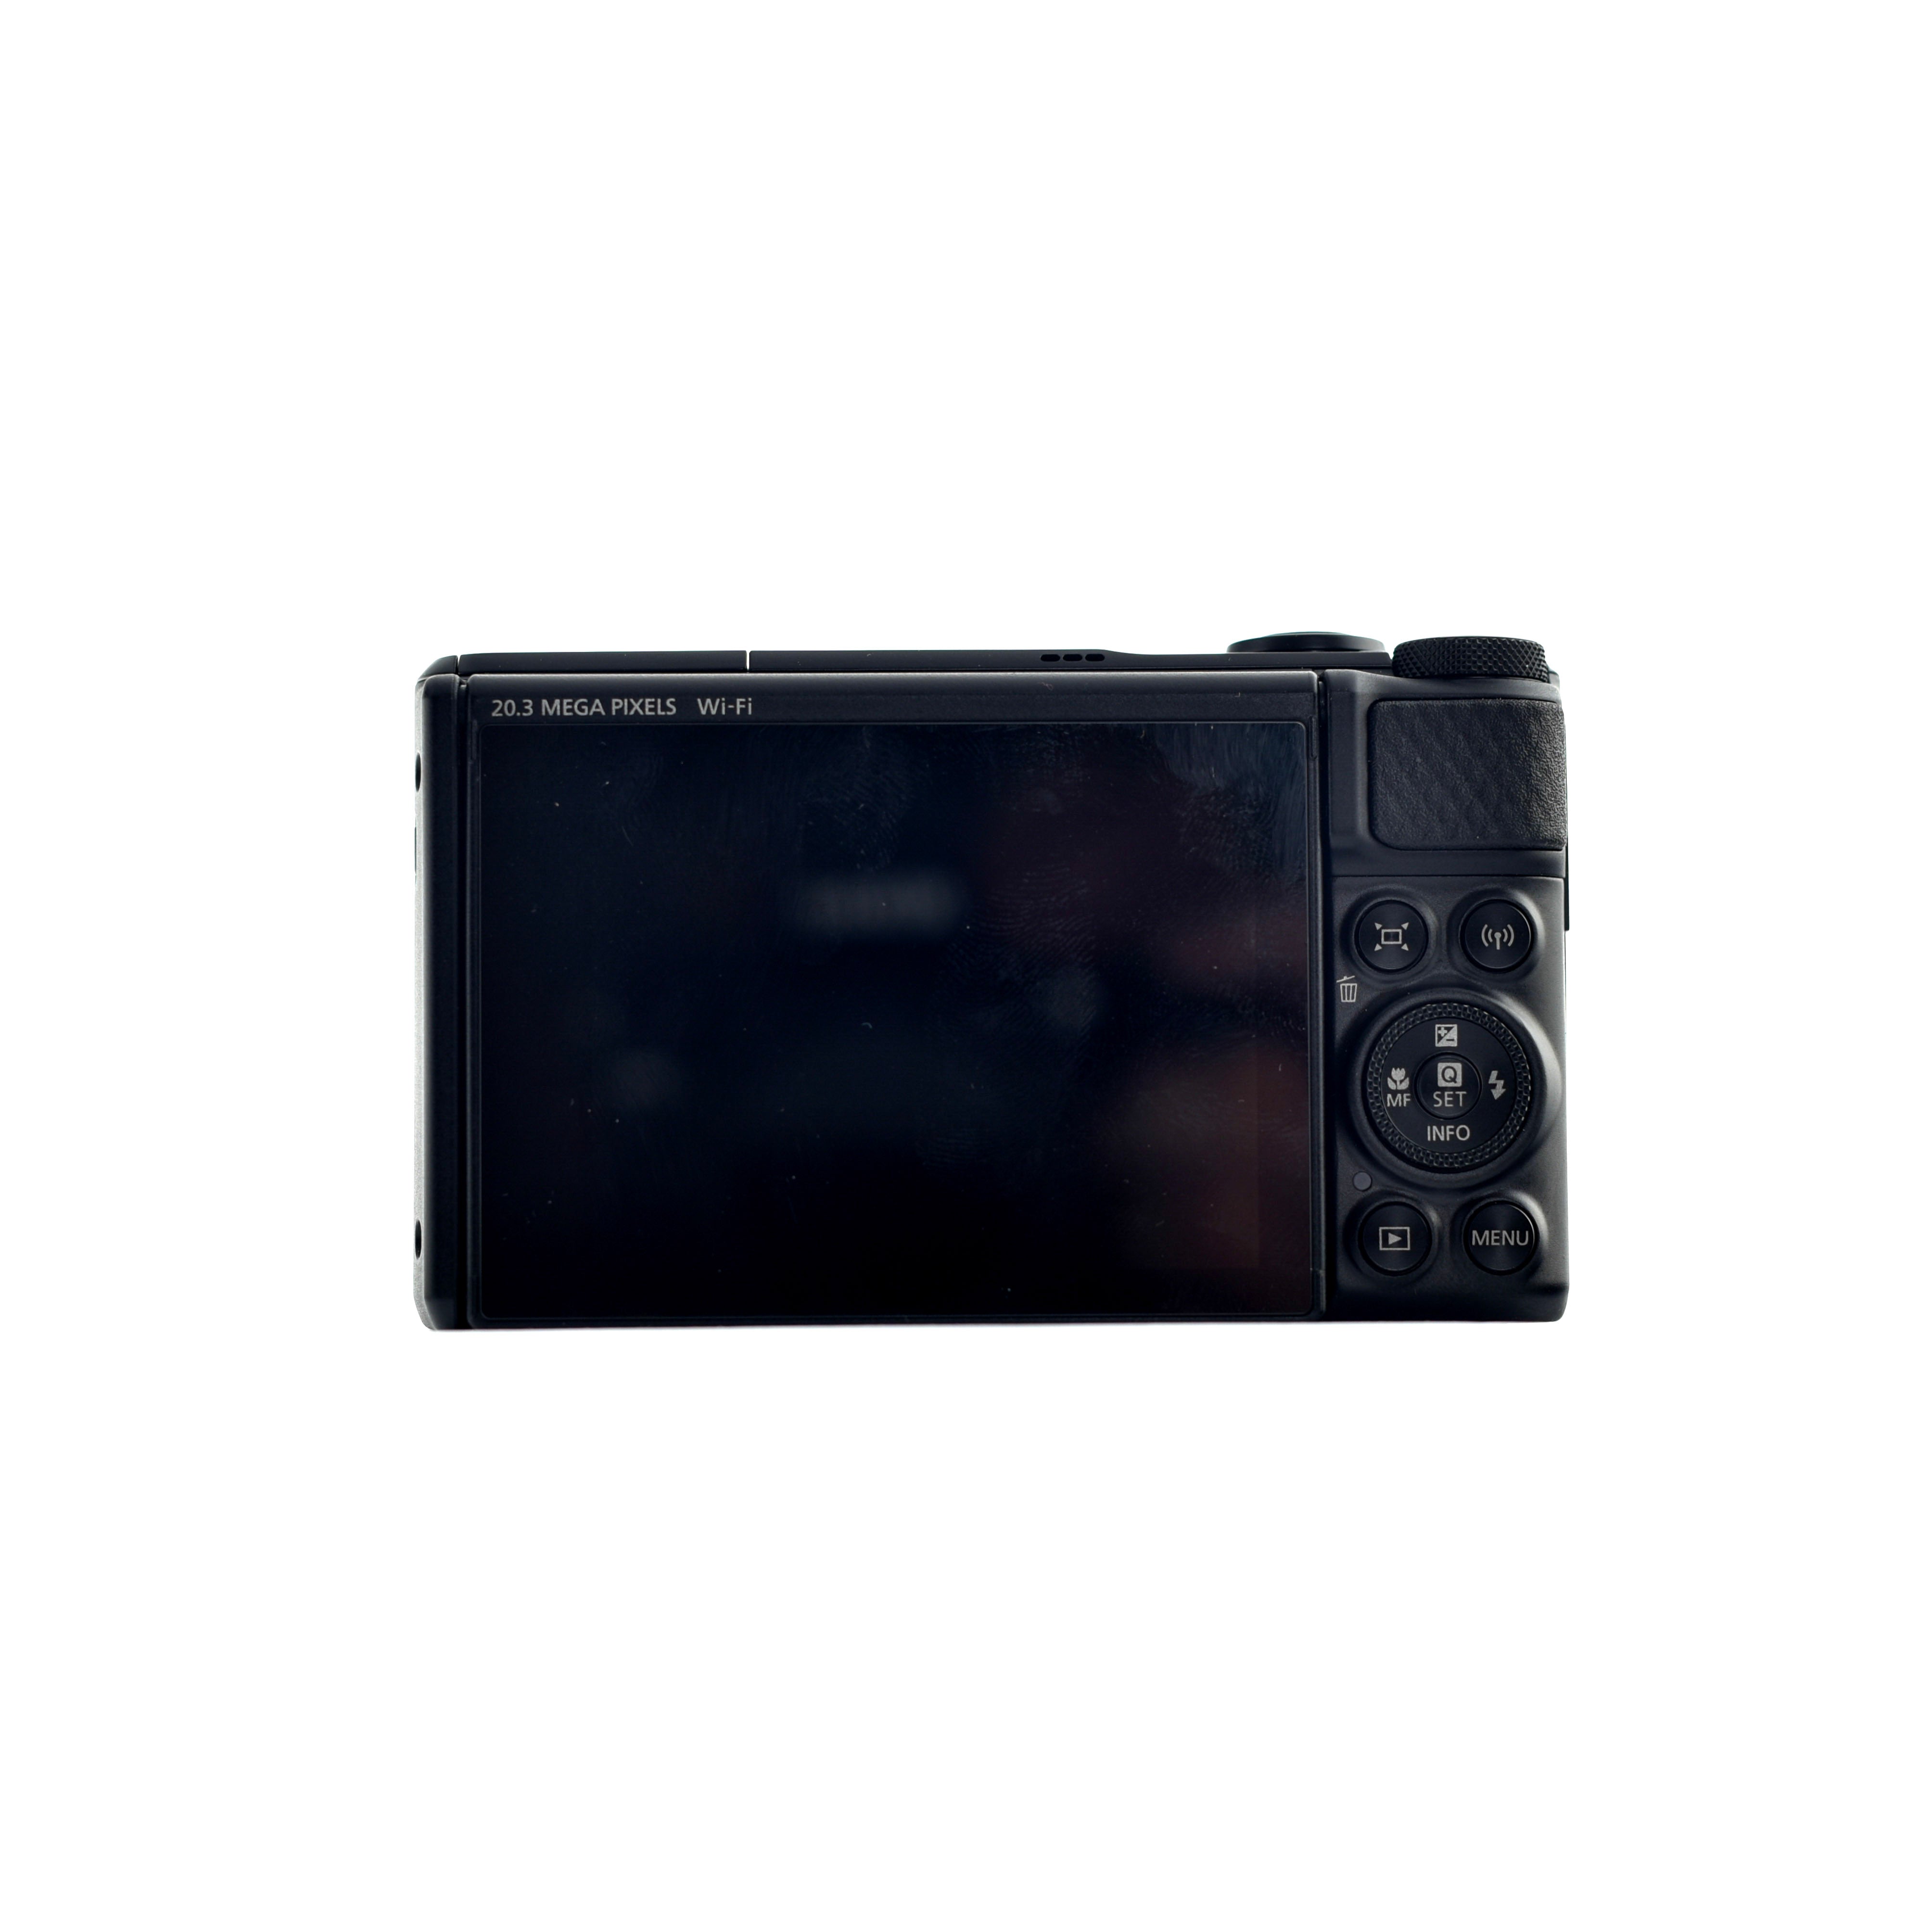 Canon Powershot SX740 mk iii compact camera (Black)